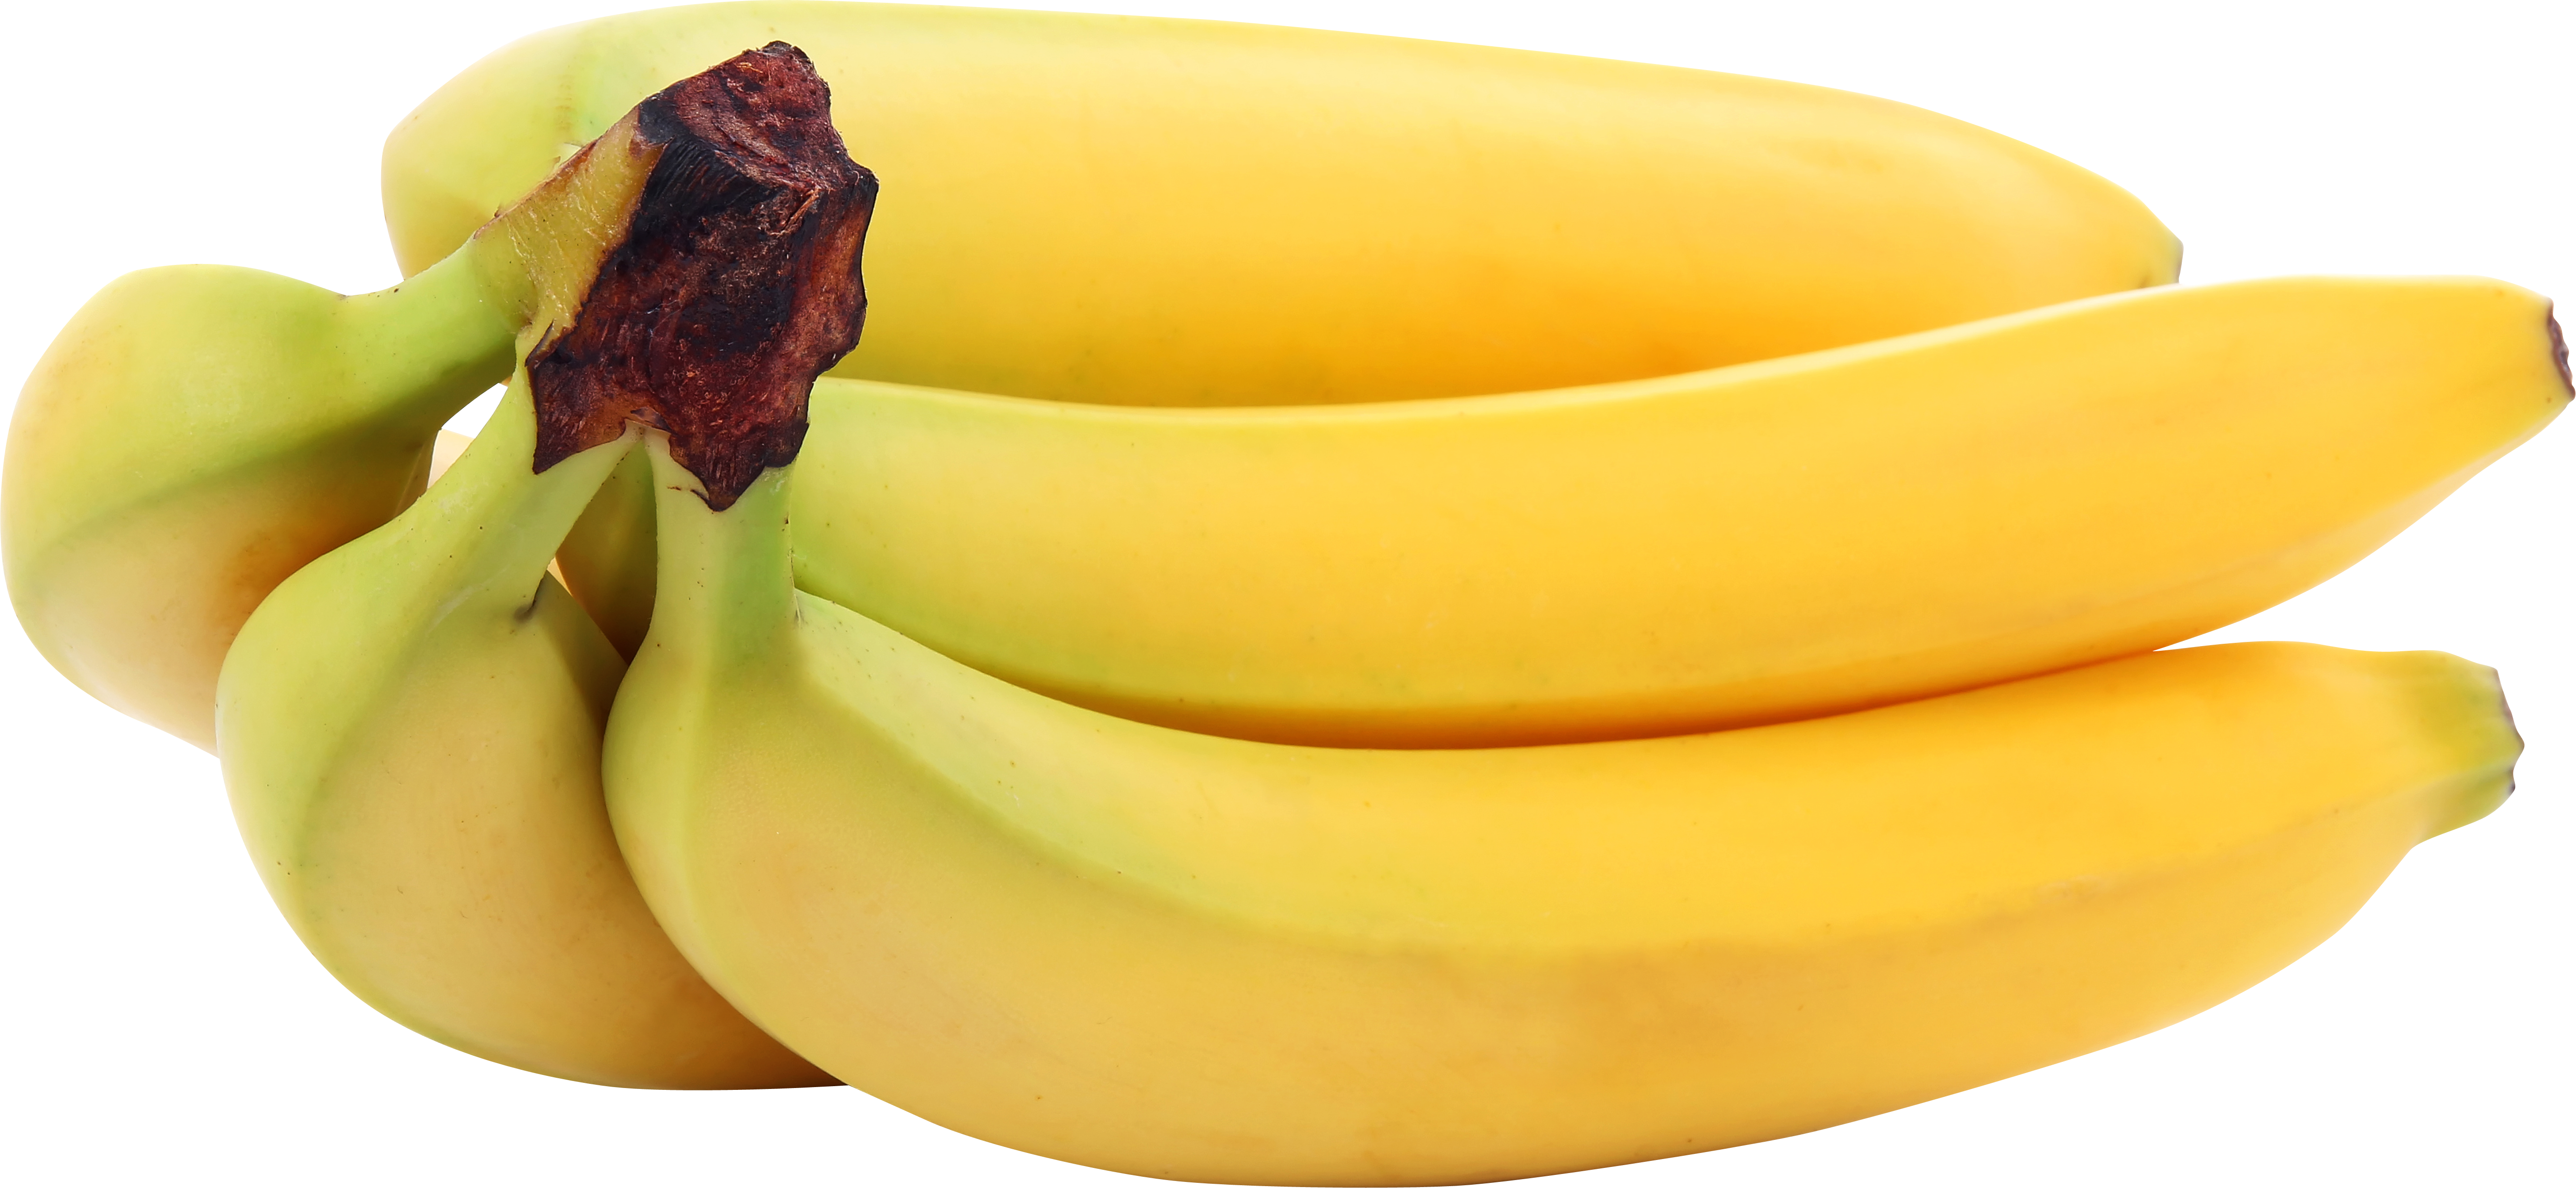 Bananas transparent image PNG